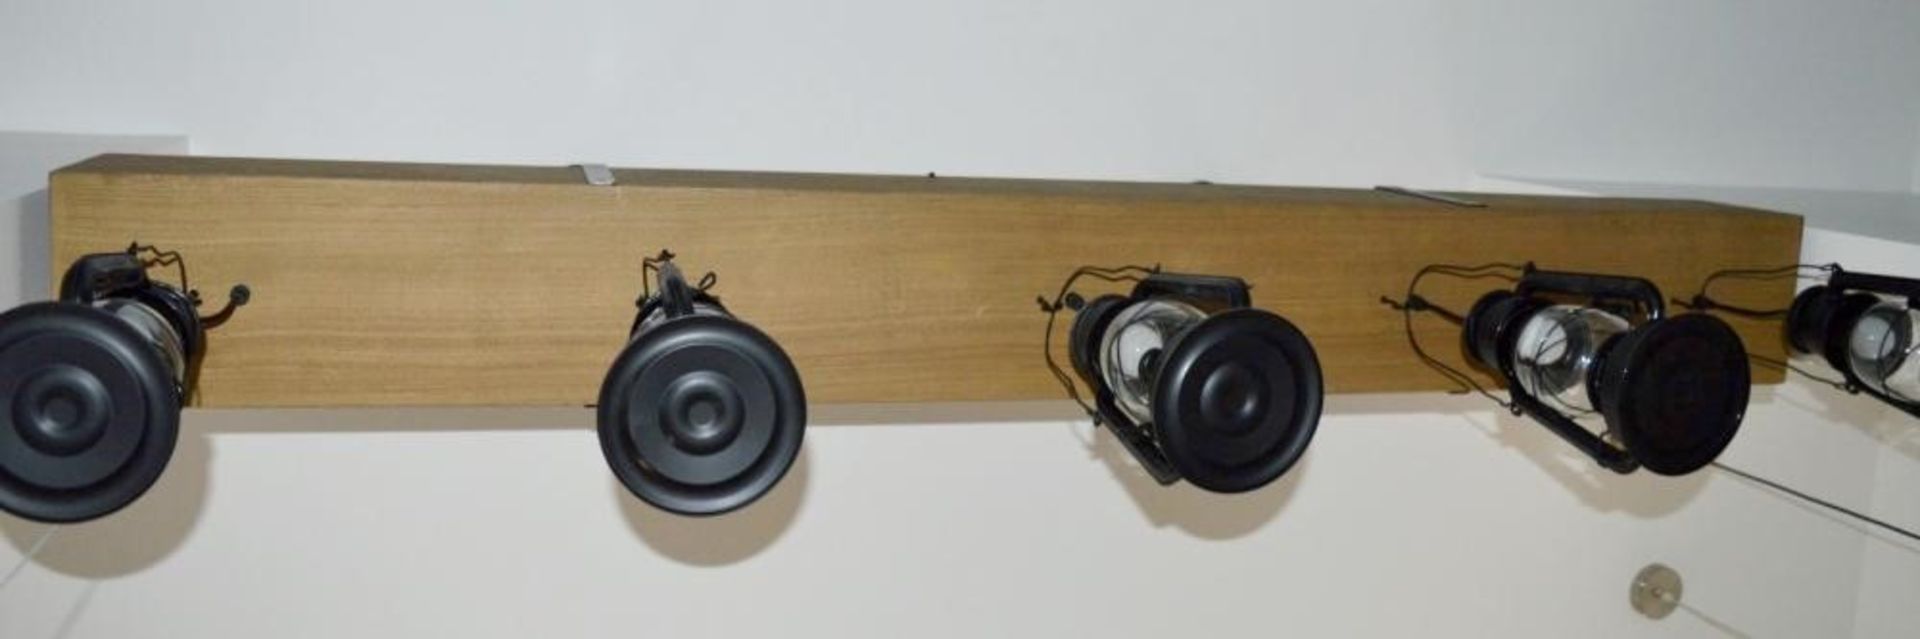 1 x Rustic Wooden Beam Decorative 5 Hurricane Lantern Ceiling Light - Ex Display Stock - CL298 - Ref - Image 3 of 5